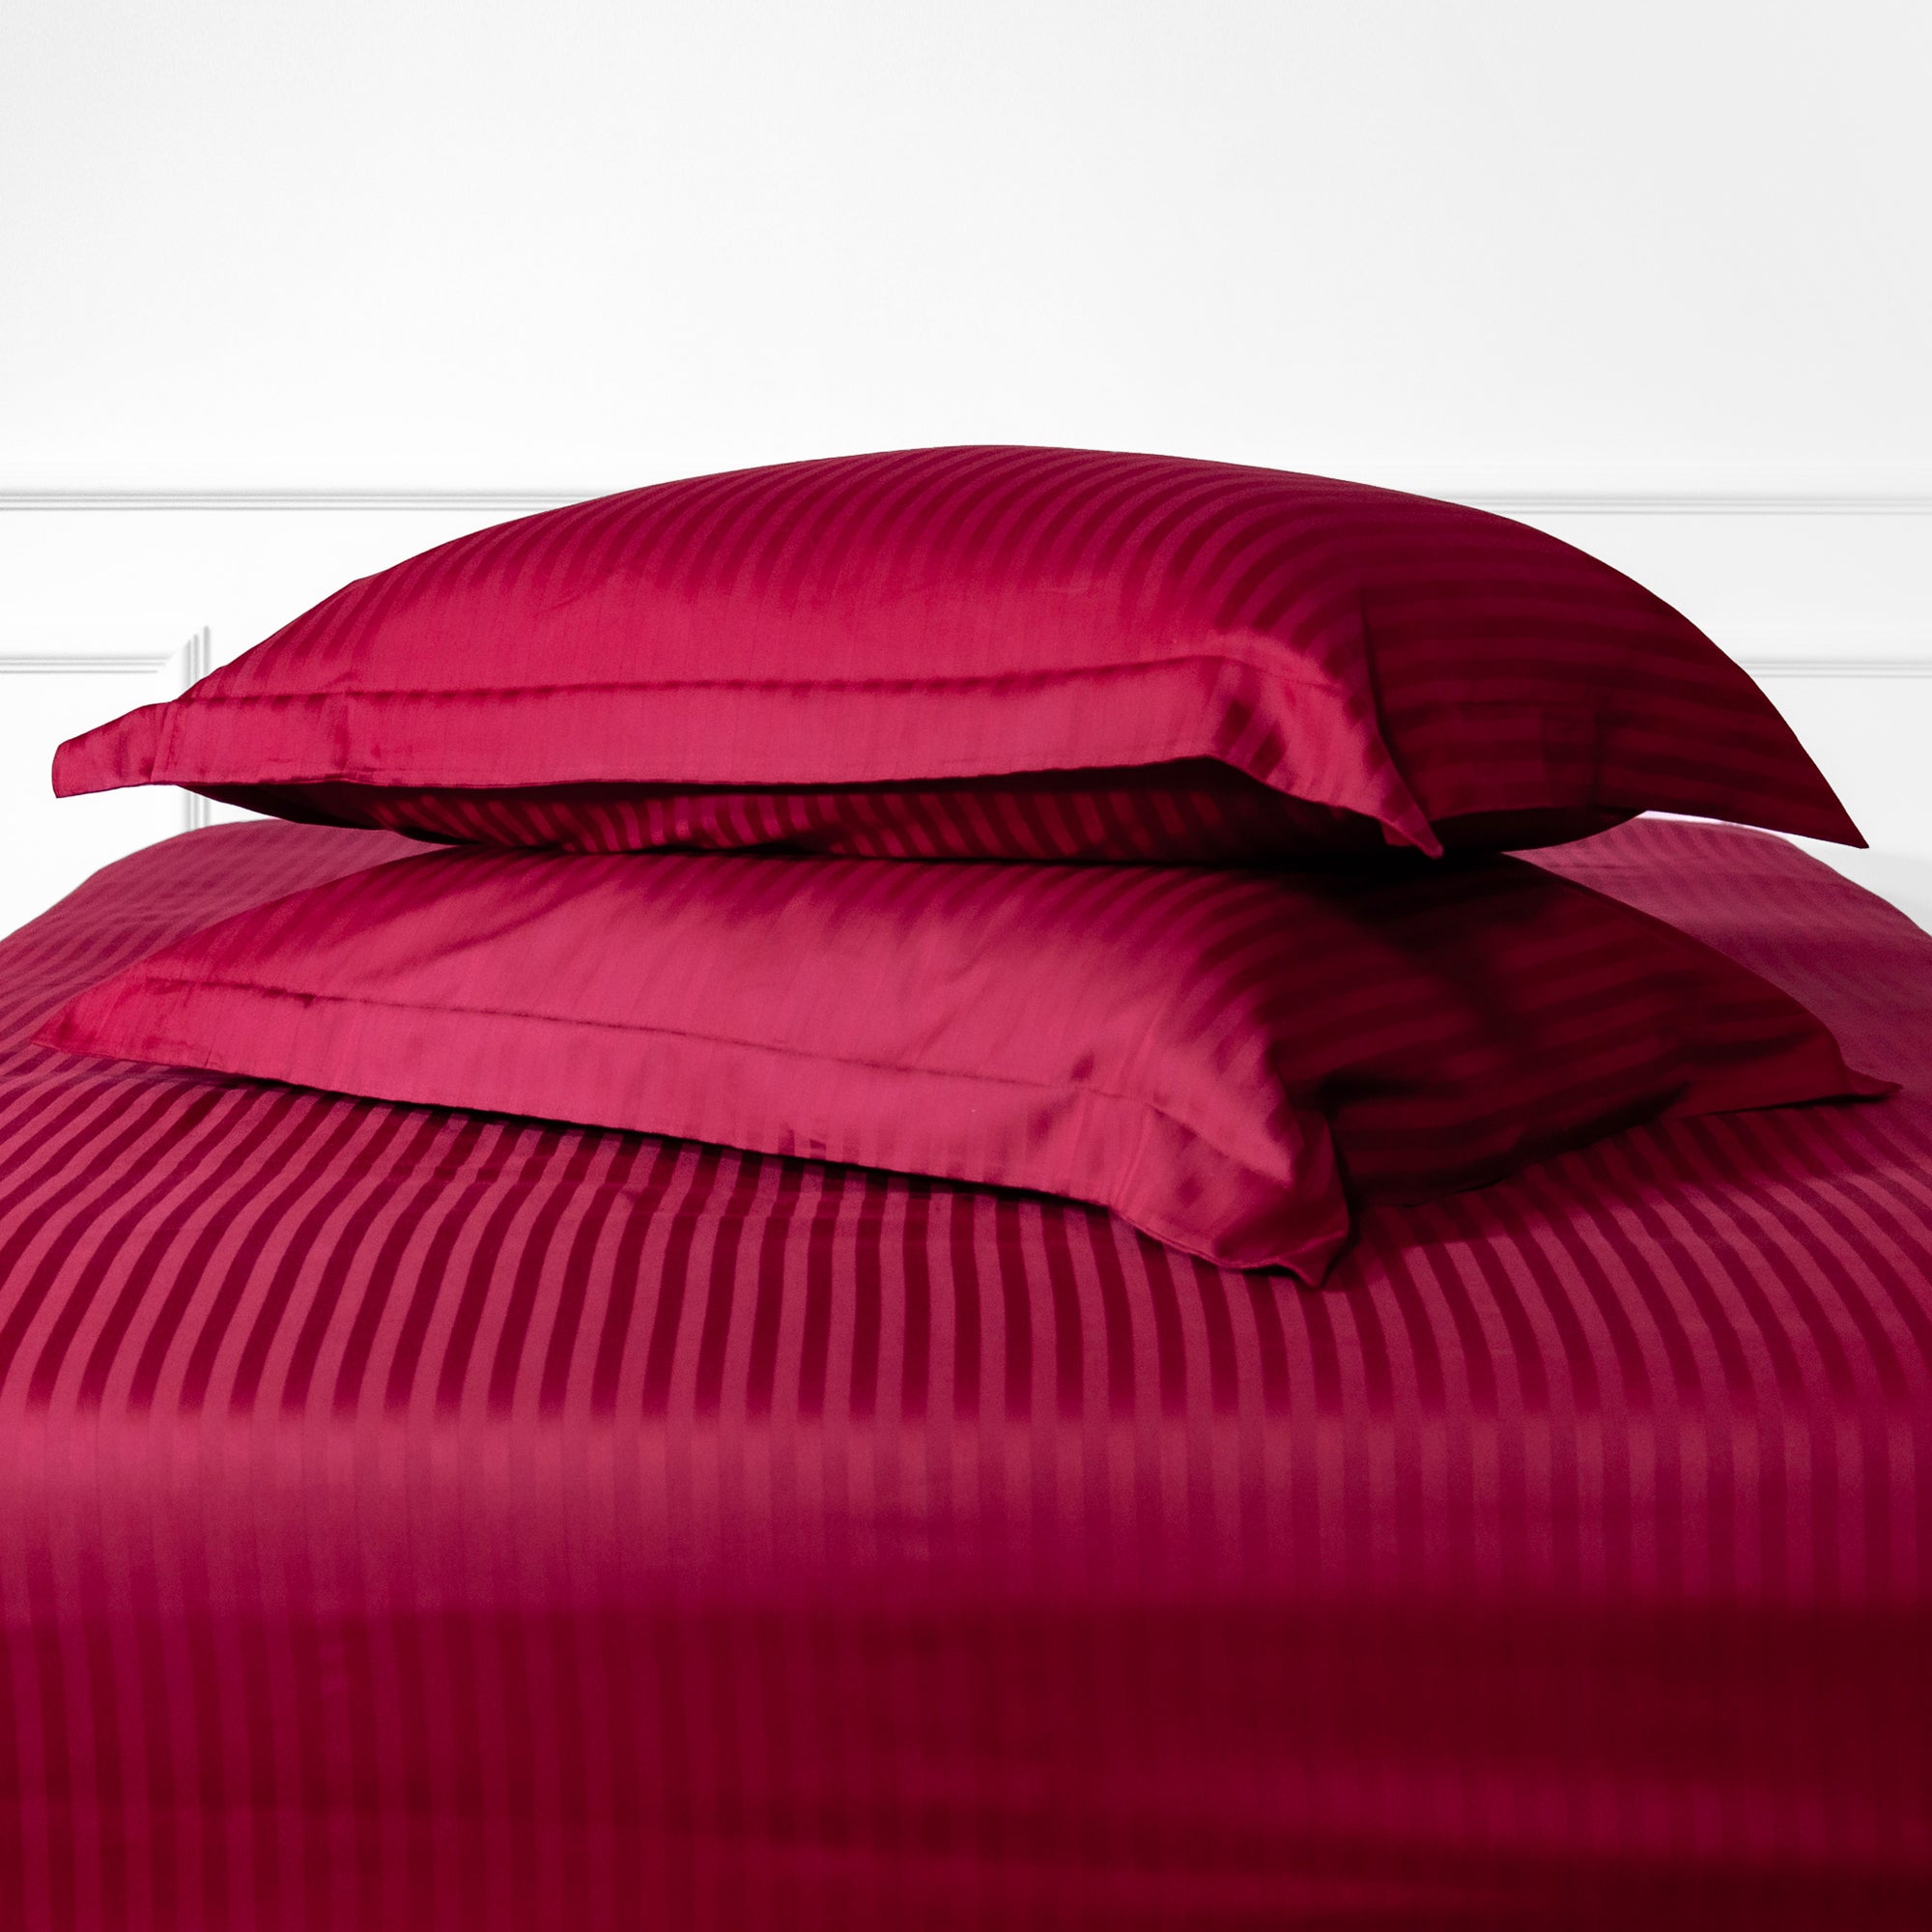 One Pair Burgundy Striped 100% Cotton Sateen Oxford Pillowcase